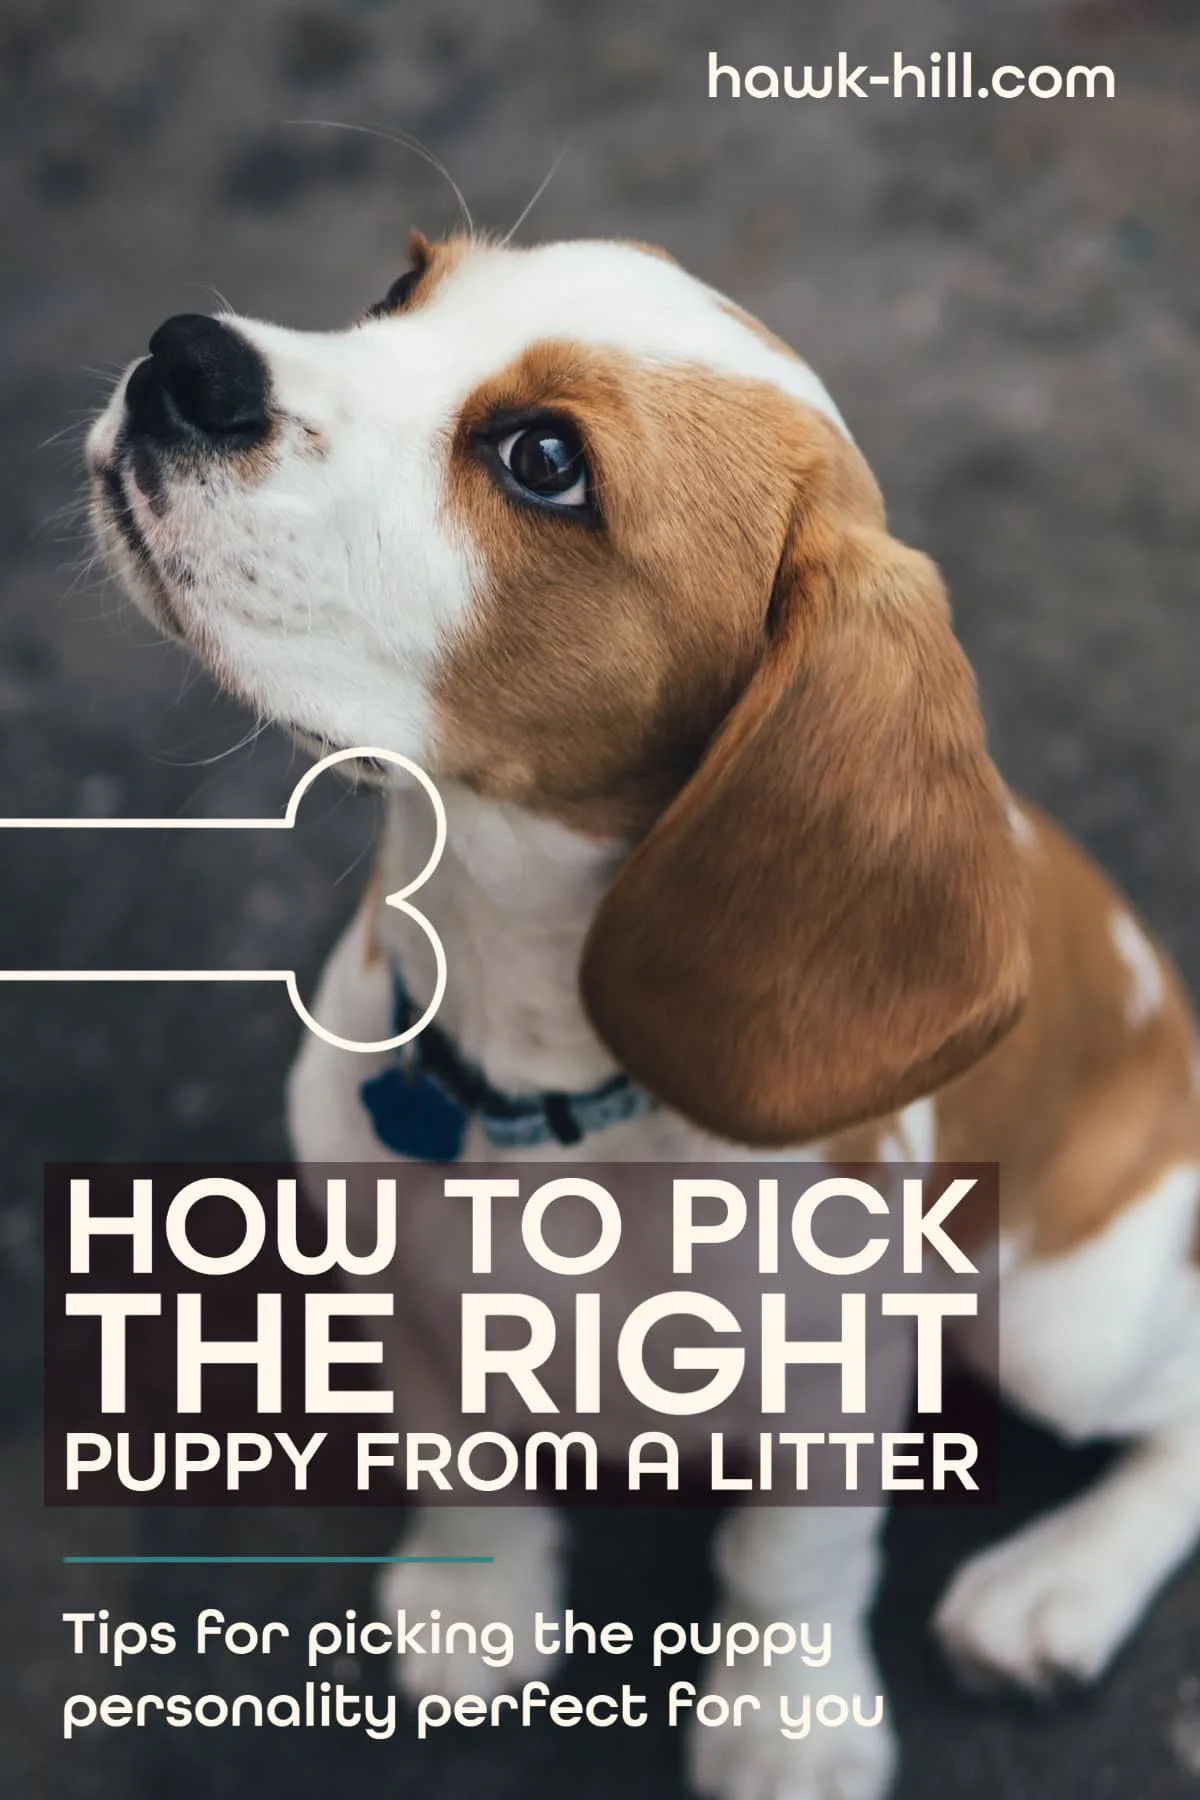 hh pick puppy pin.jpg